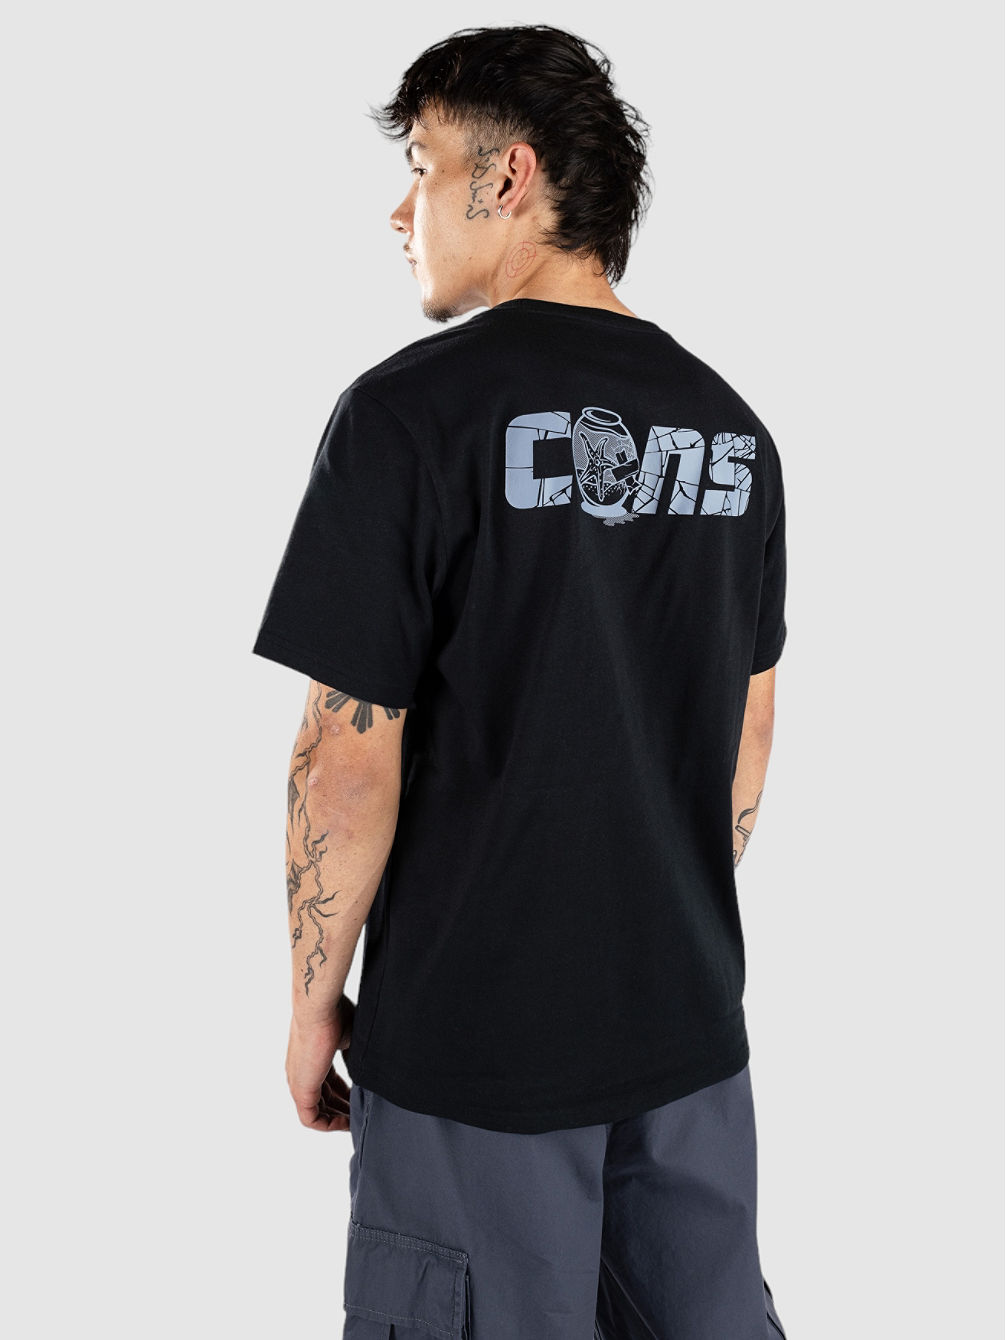 Cons Fishbowl T-Shirt